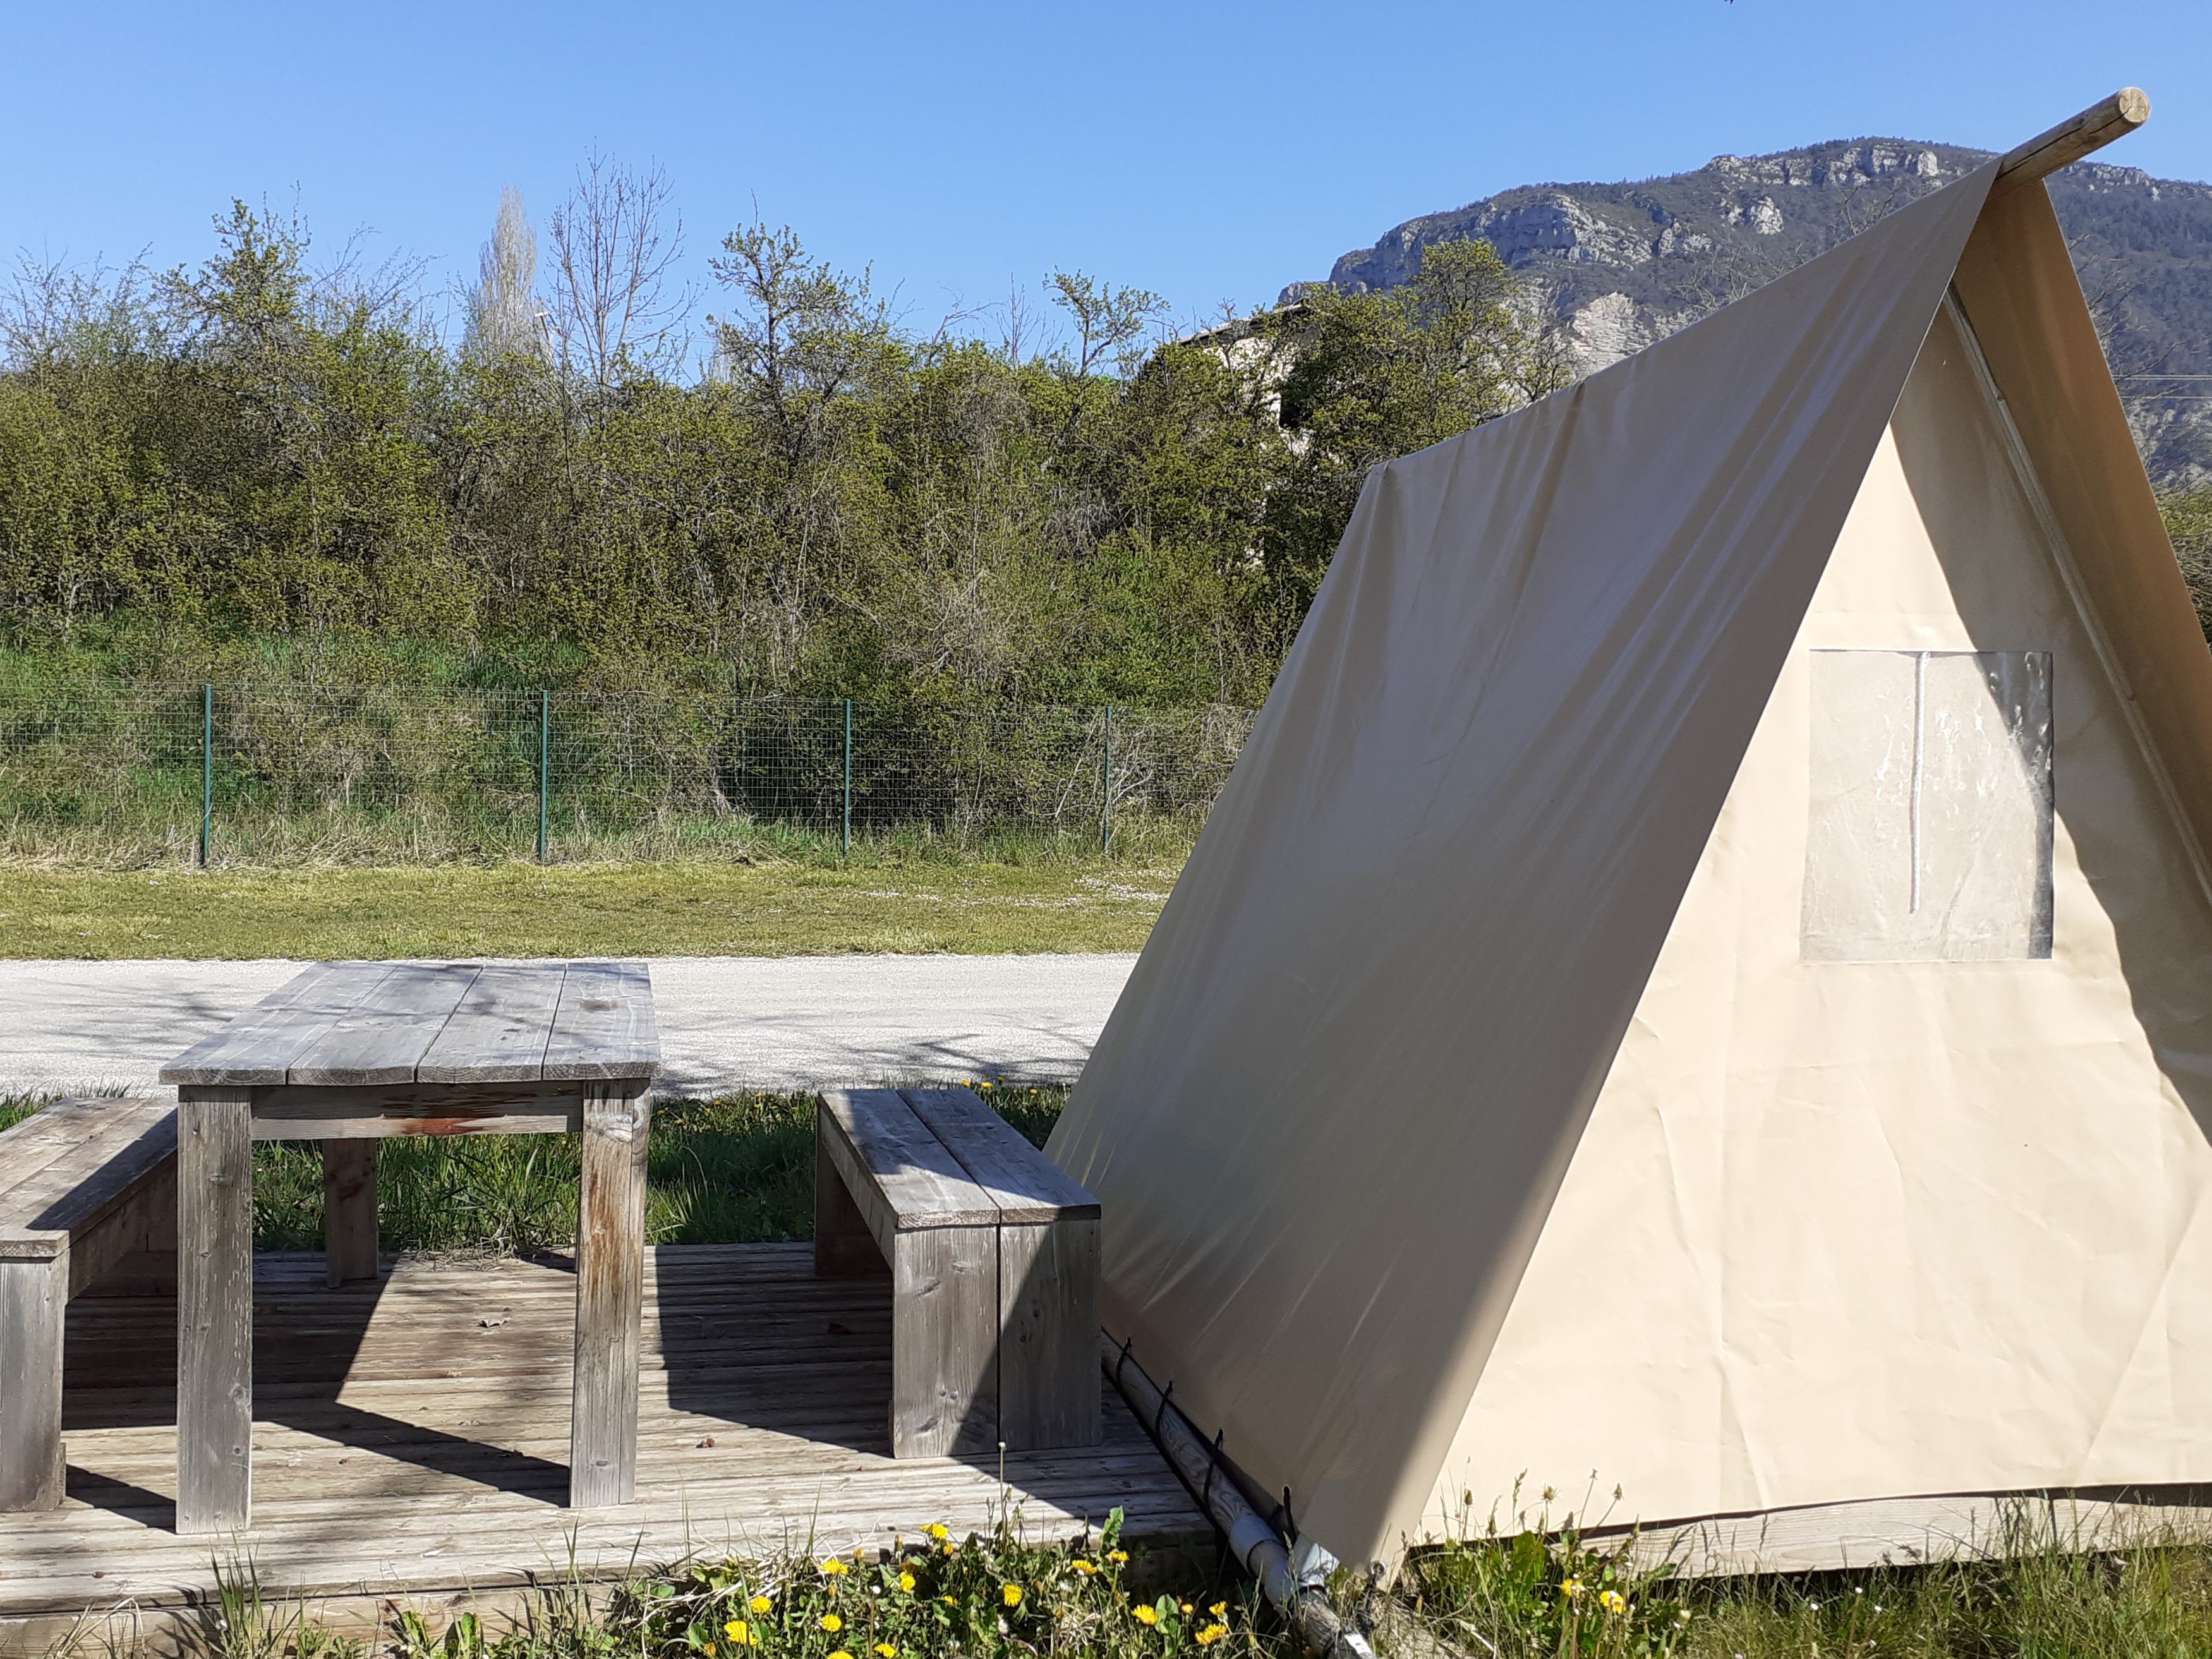 Mietunterkunft - Tente Scoute 6M² - Ohne Sanitäranlagen - Camping Koawa Le Lac Bleu